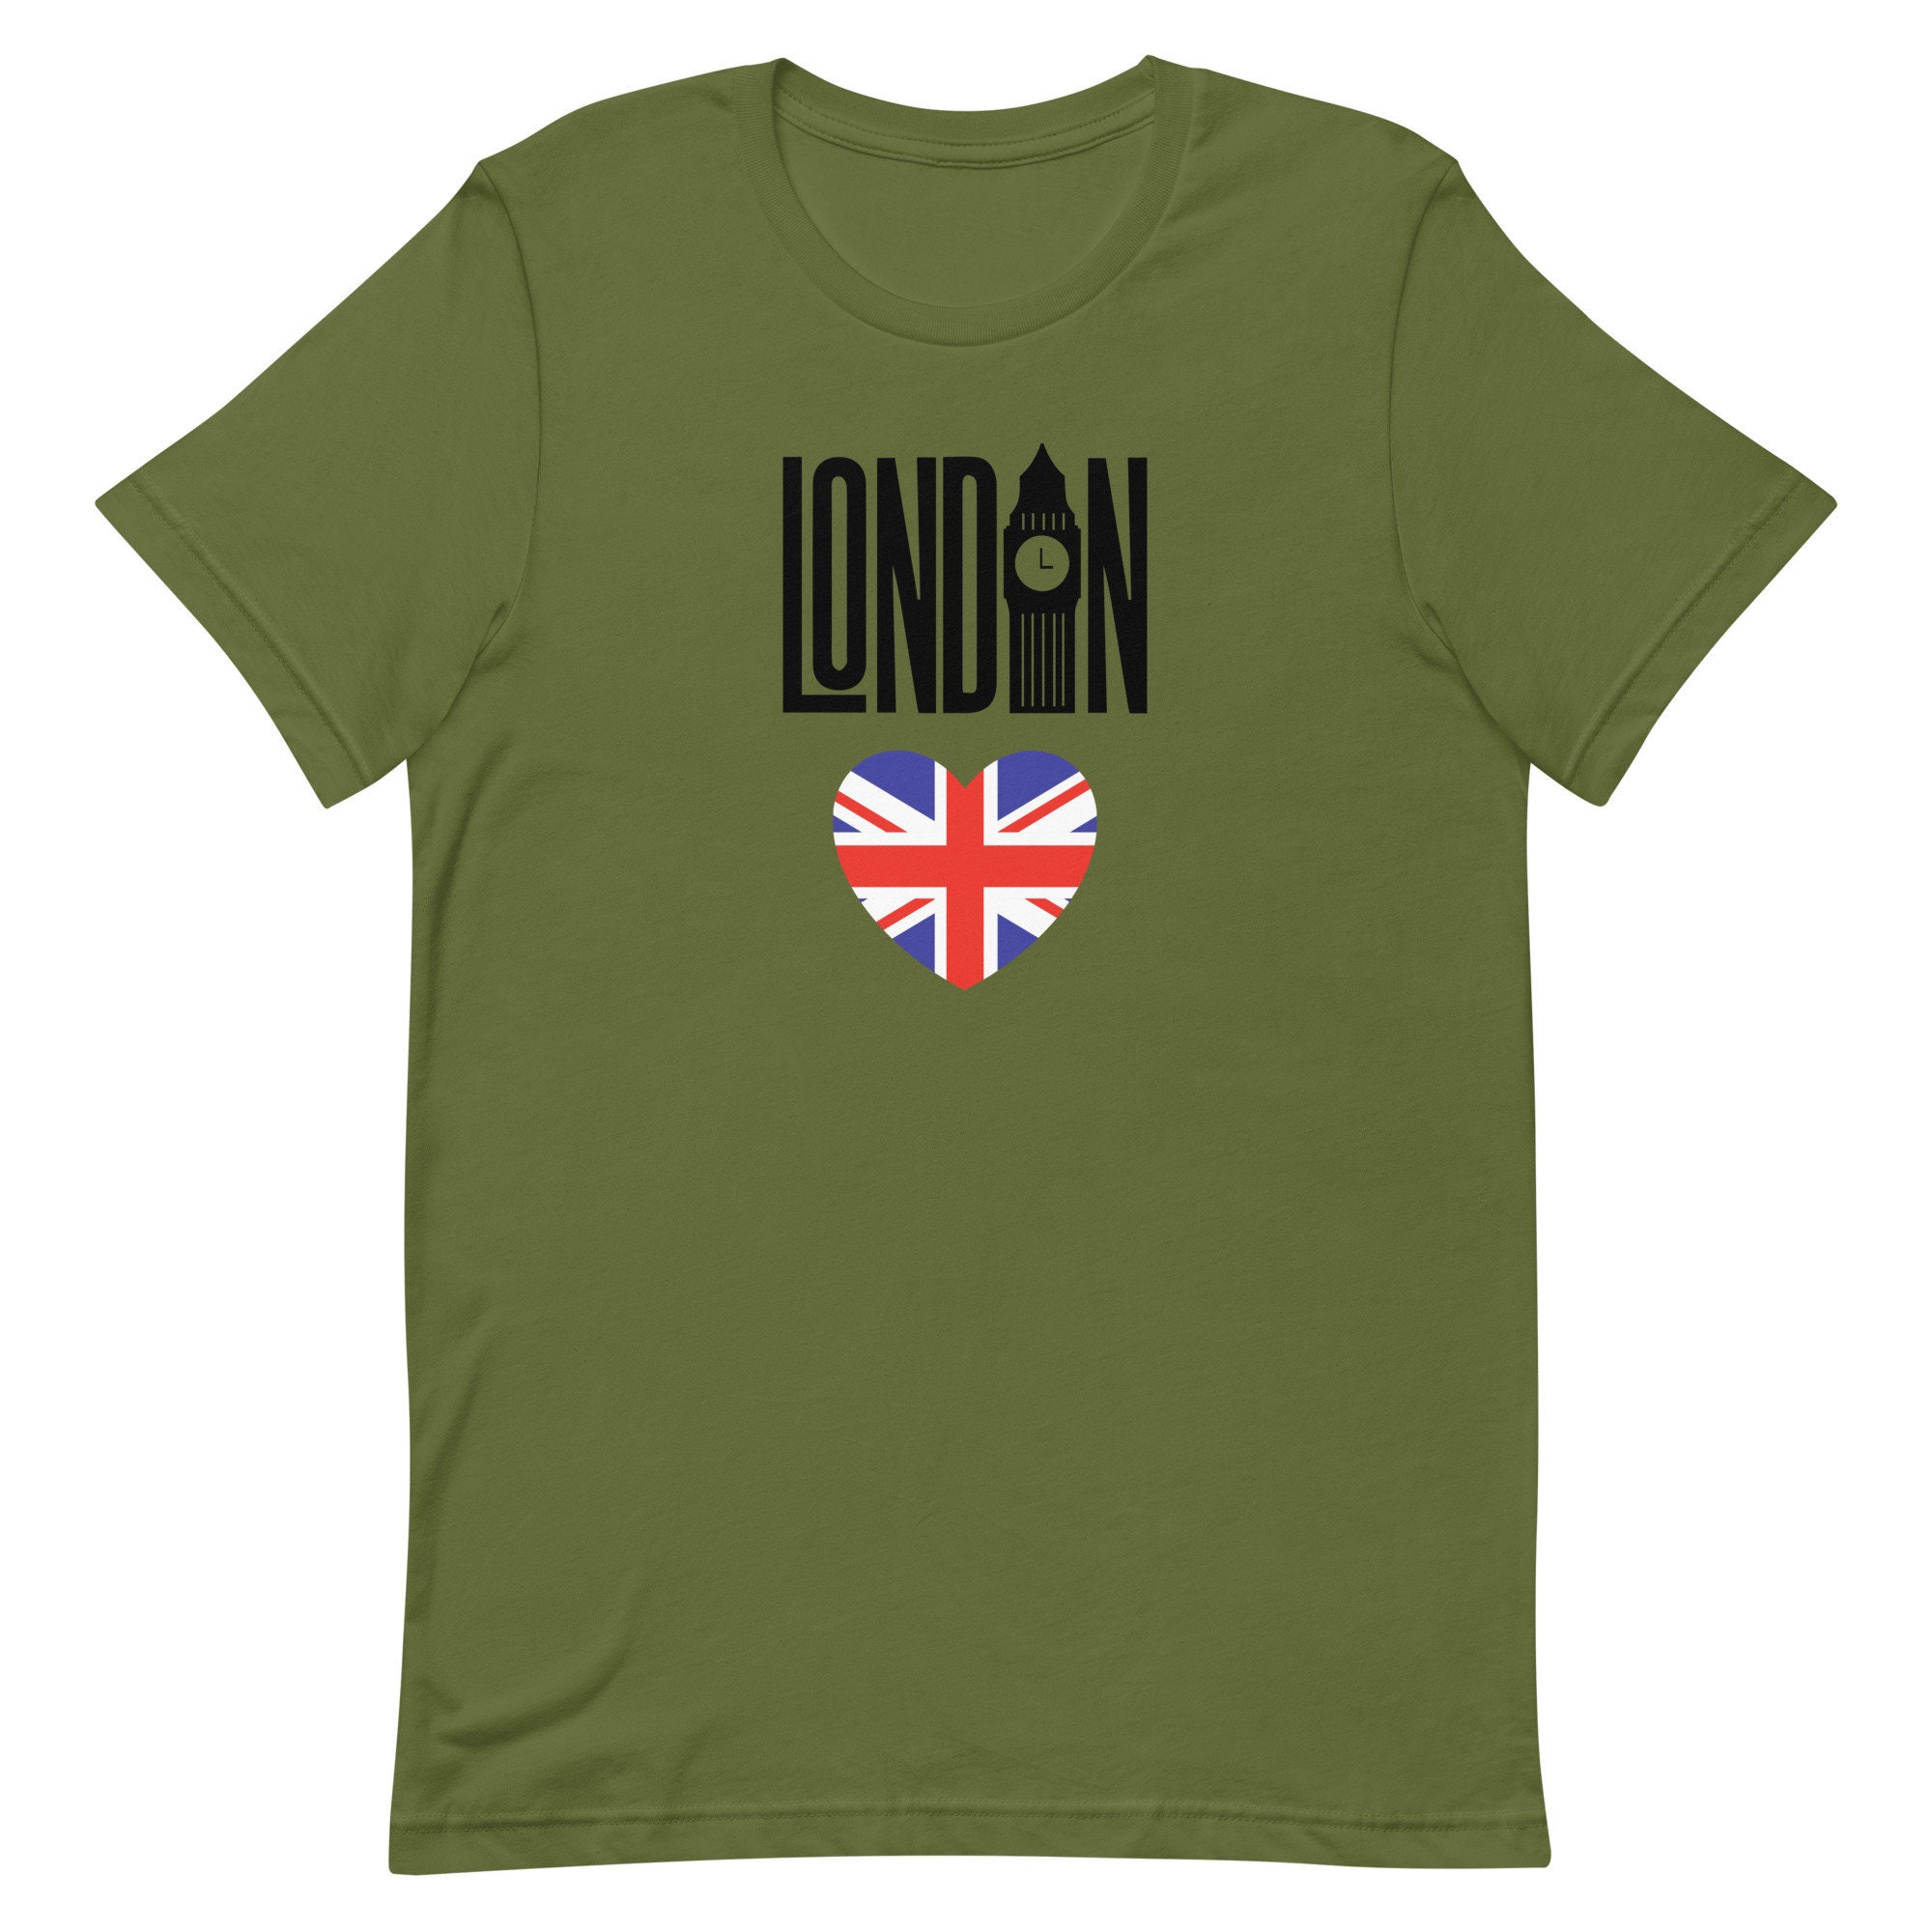 Discover London England T shirt